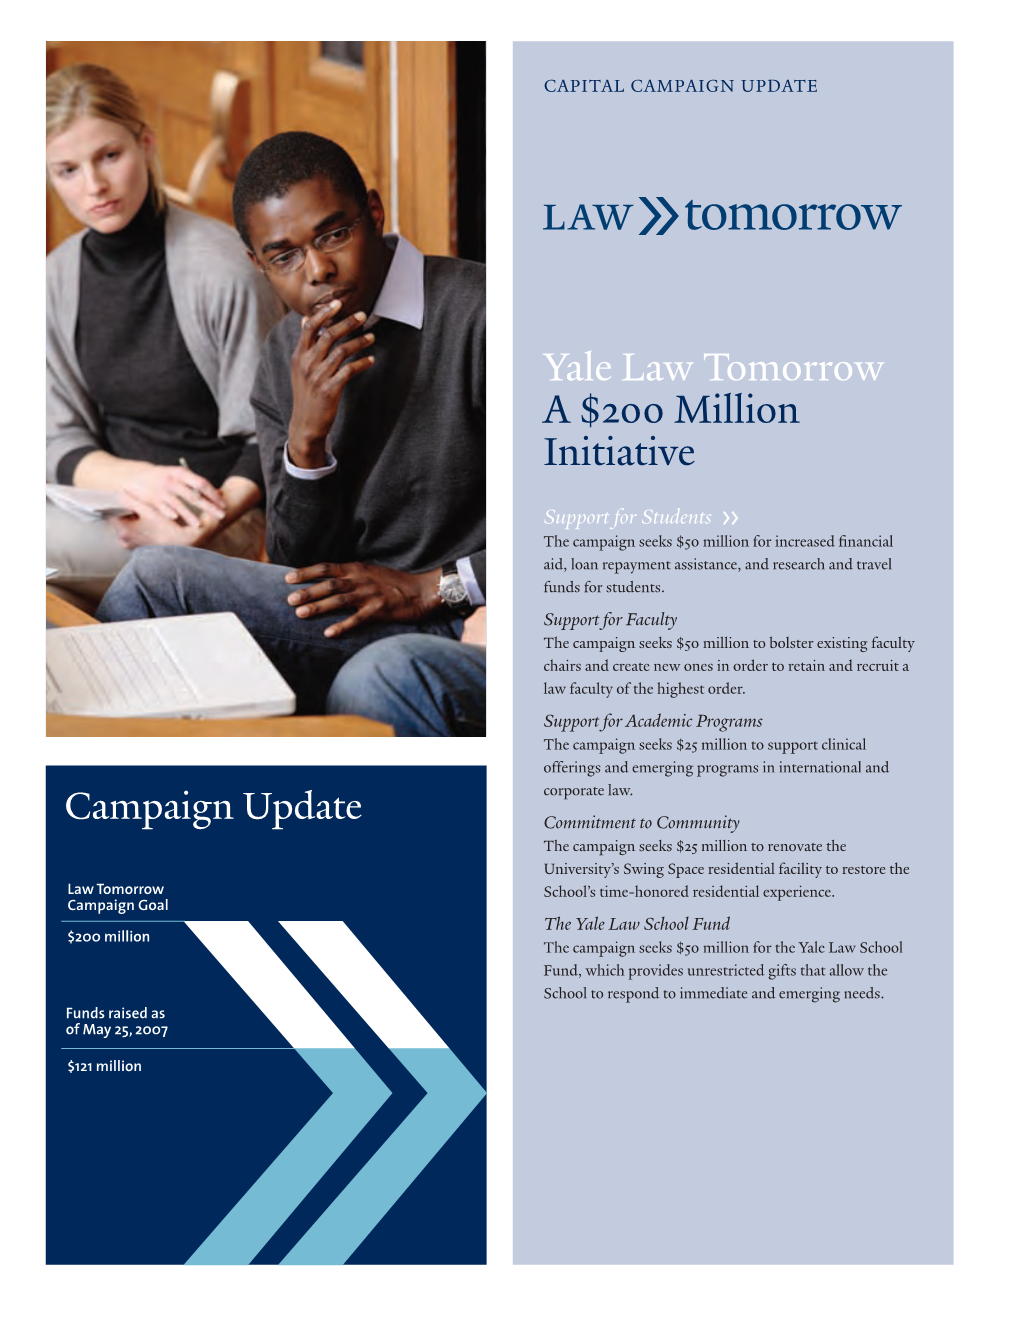 Law Tomorrow Capital Campaign